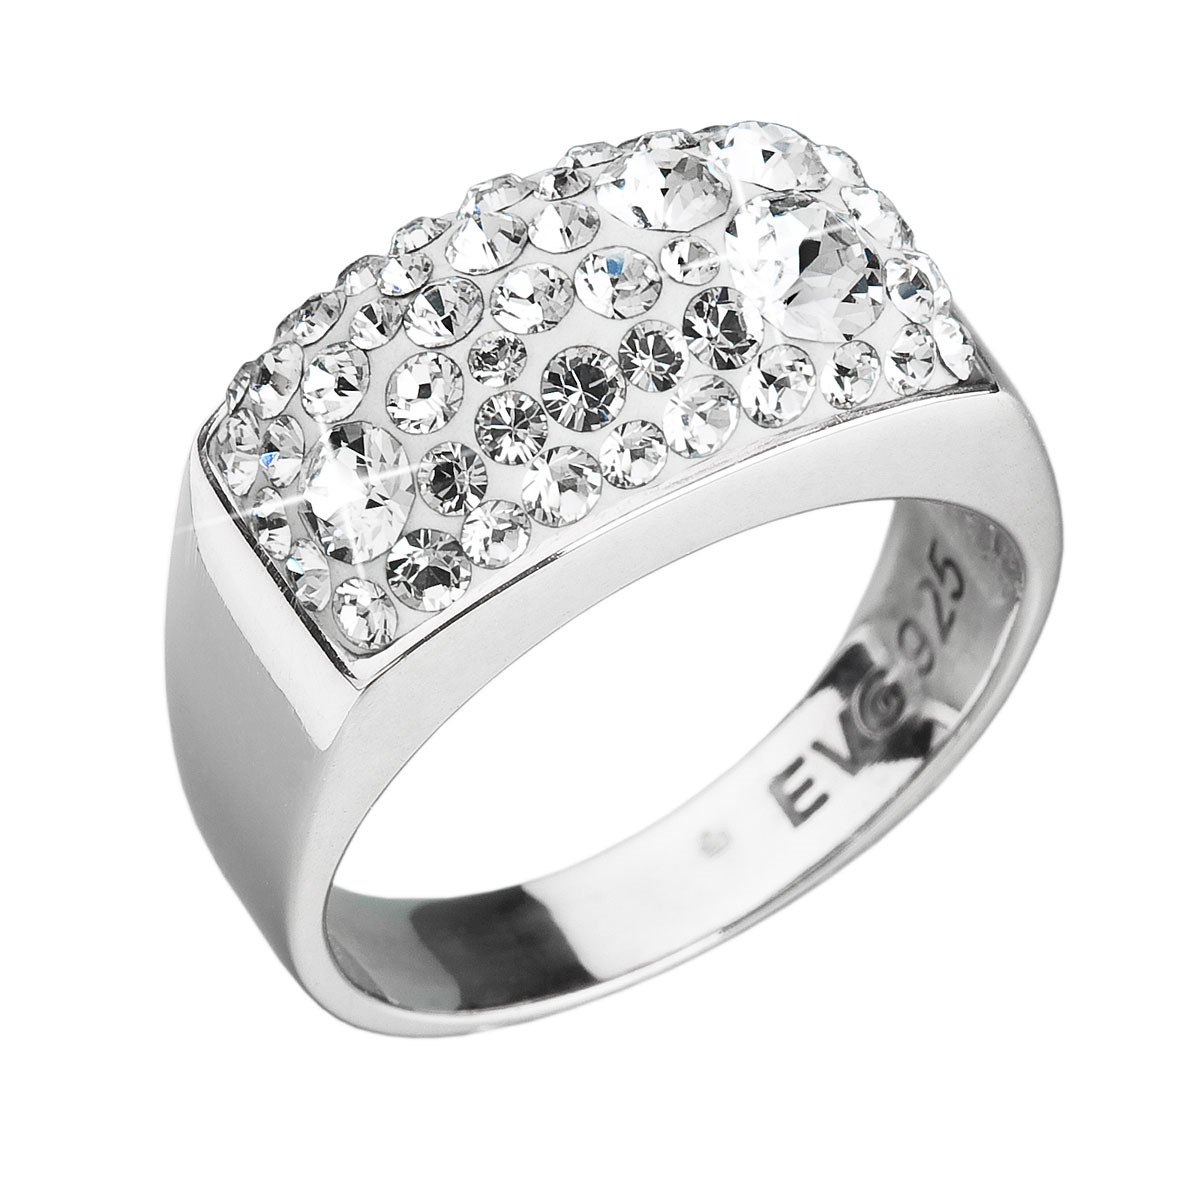 EVOLUTION GROUP CZ Stříbrný prsten s krystaly Swarovski krystal, vel: 58 - velikost 58 - 35014.1